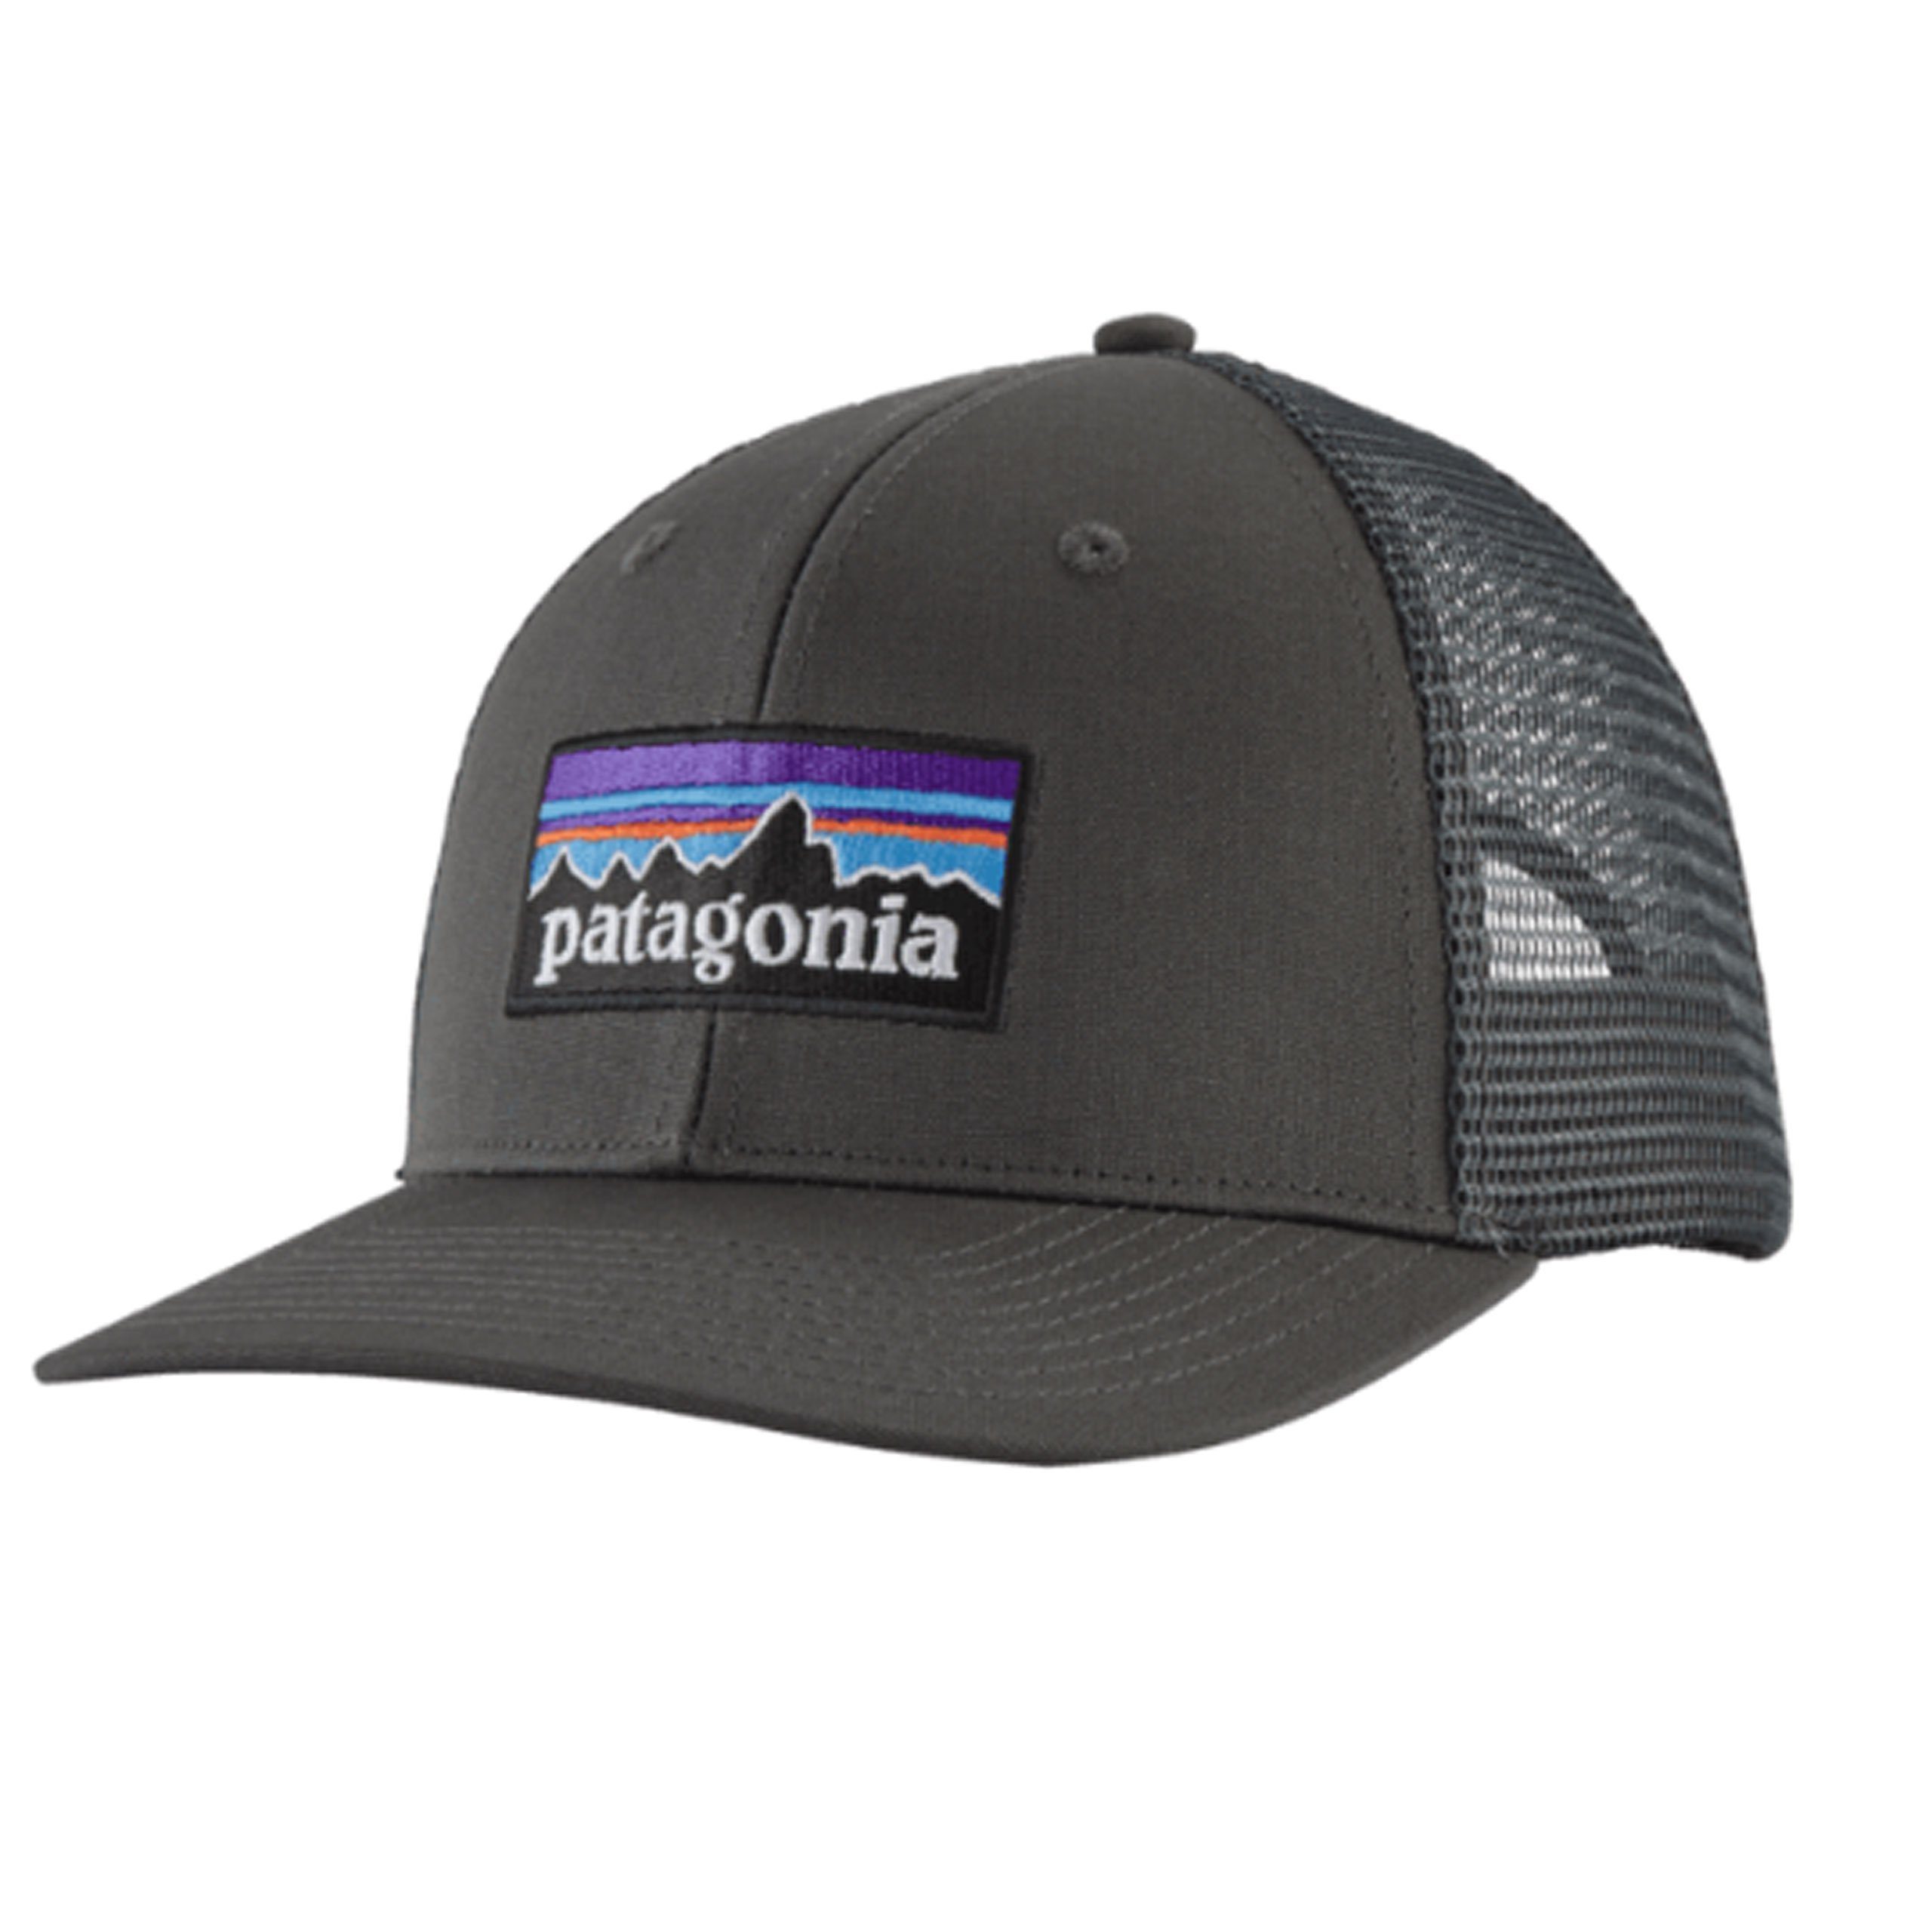 Patagonia grey Baseball luftdurchlässige forge Trucker Cap - P-6 Patagonia Hat Truckercap/Baseballkappe